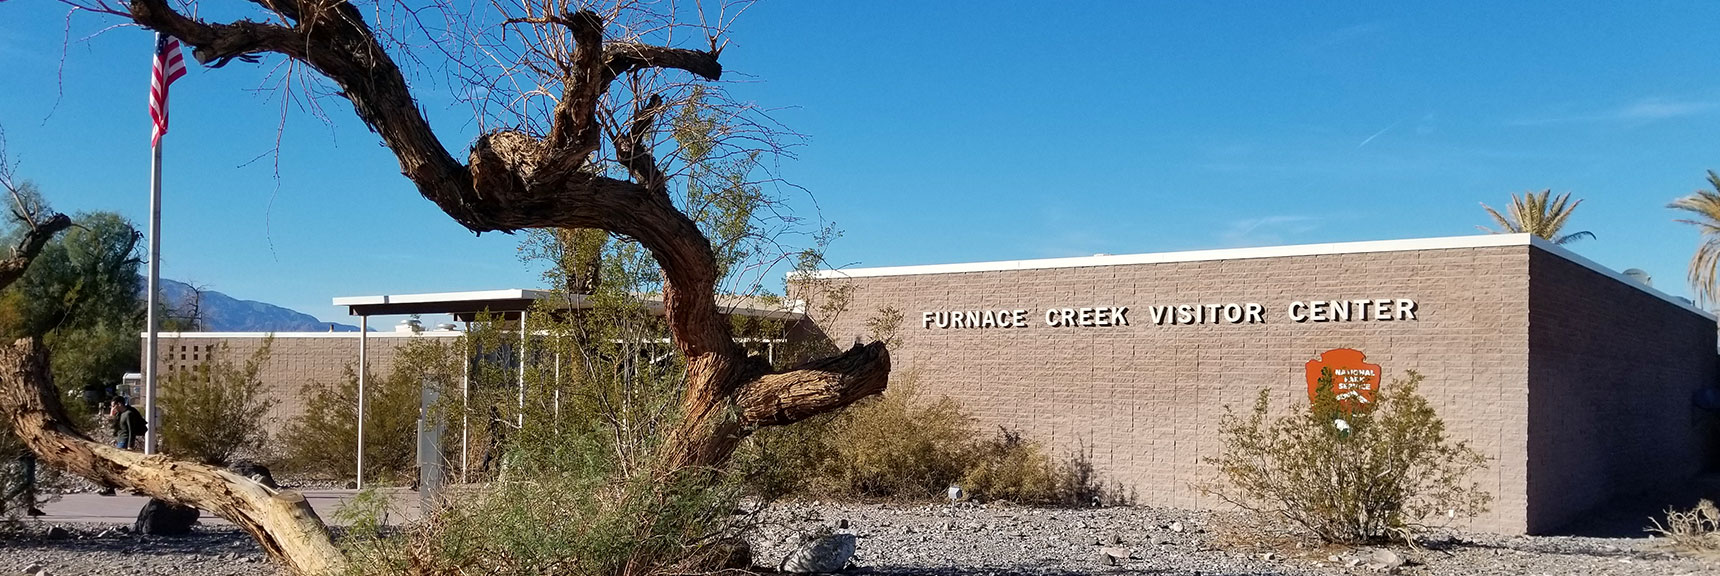 Death Valley National Park Furnace Creek Visitor Center November 24th 2018